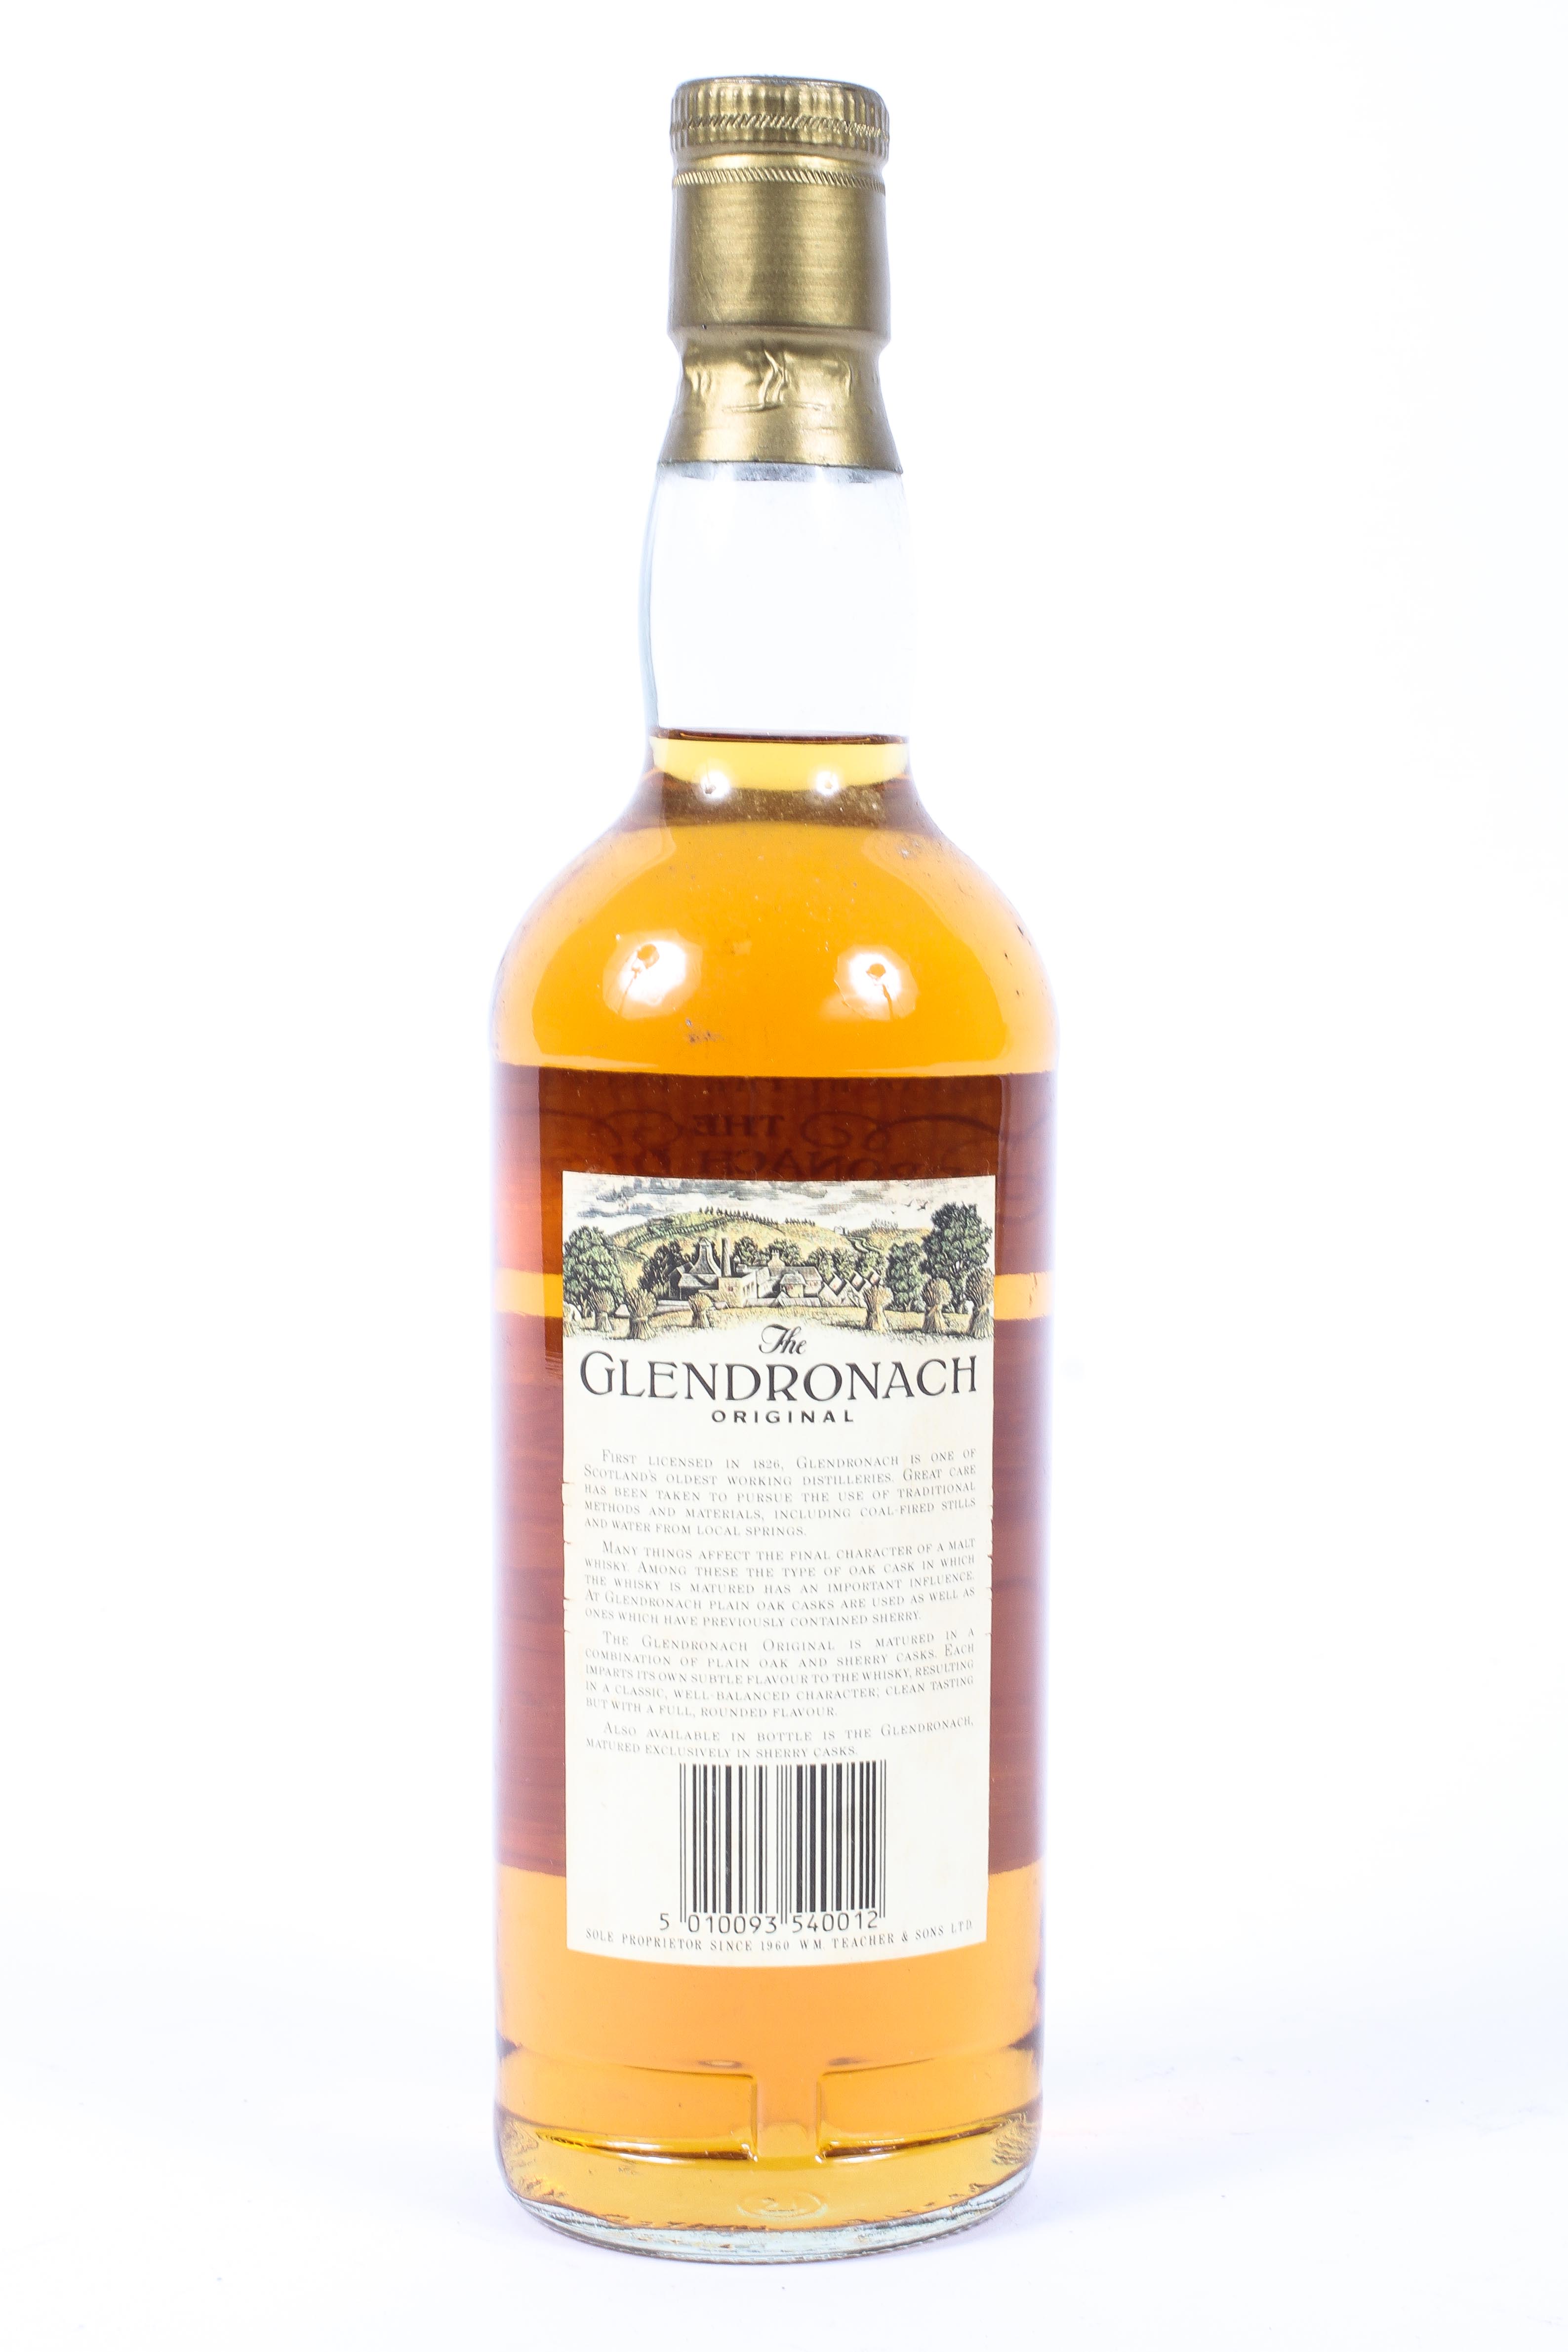 Glendronach original 12 year old pure highland malt scotch whisky, 40% vol, 75cl, - Image 2 of 2